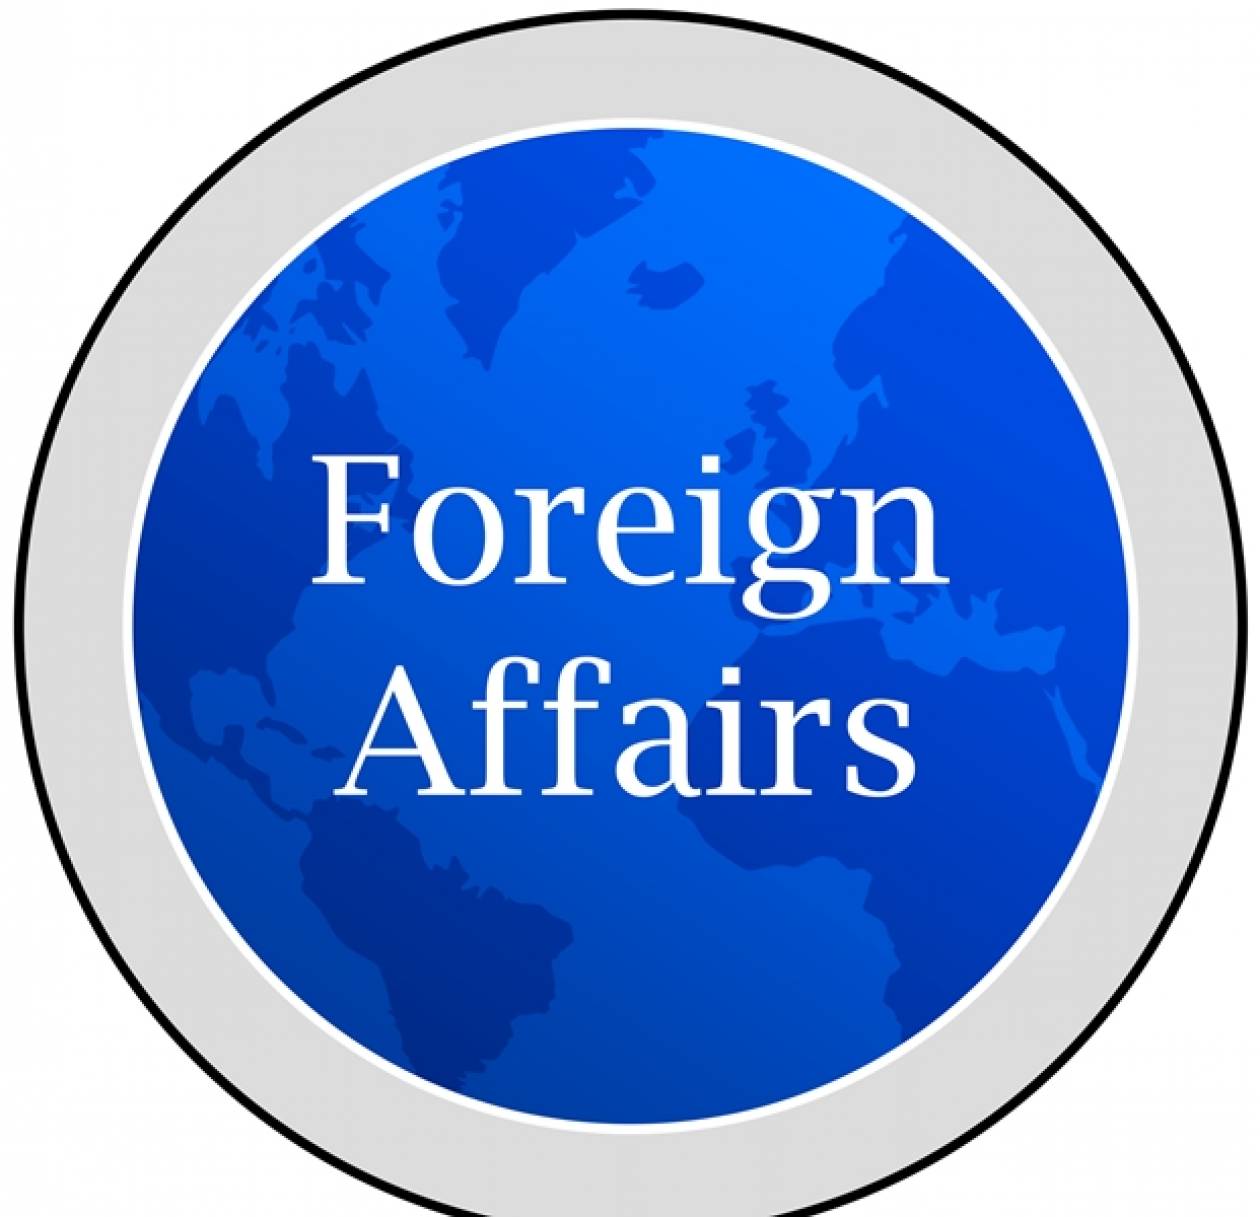 Foreign Affairs: Έξαρση λαϊκισμού και εθνικισμού σε ΕΕ και ΗΠΑ